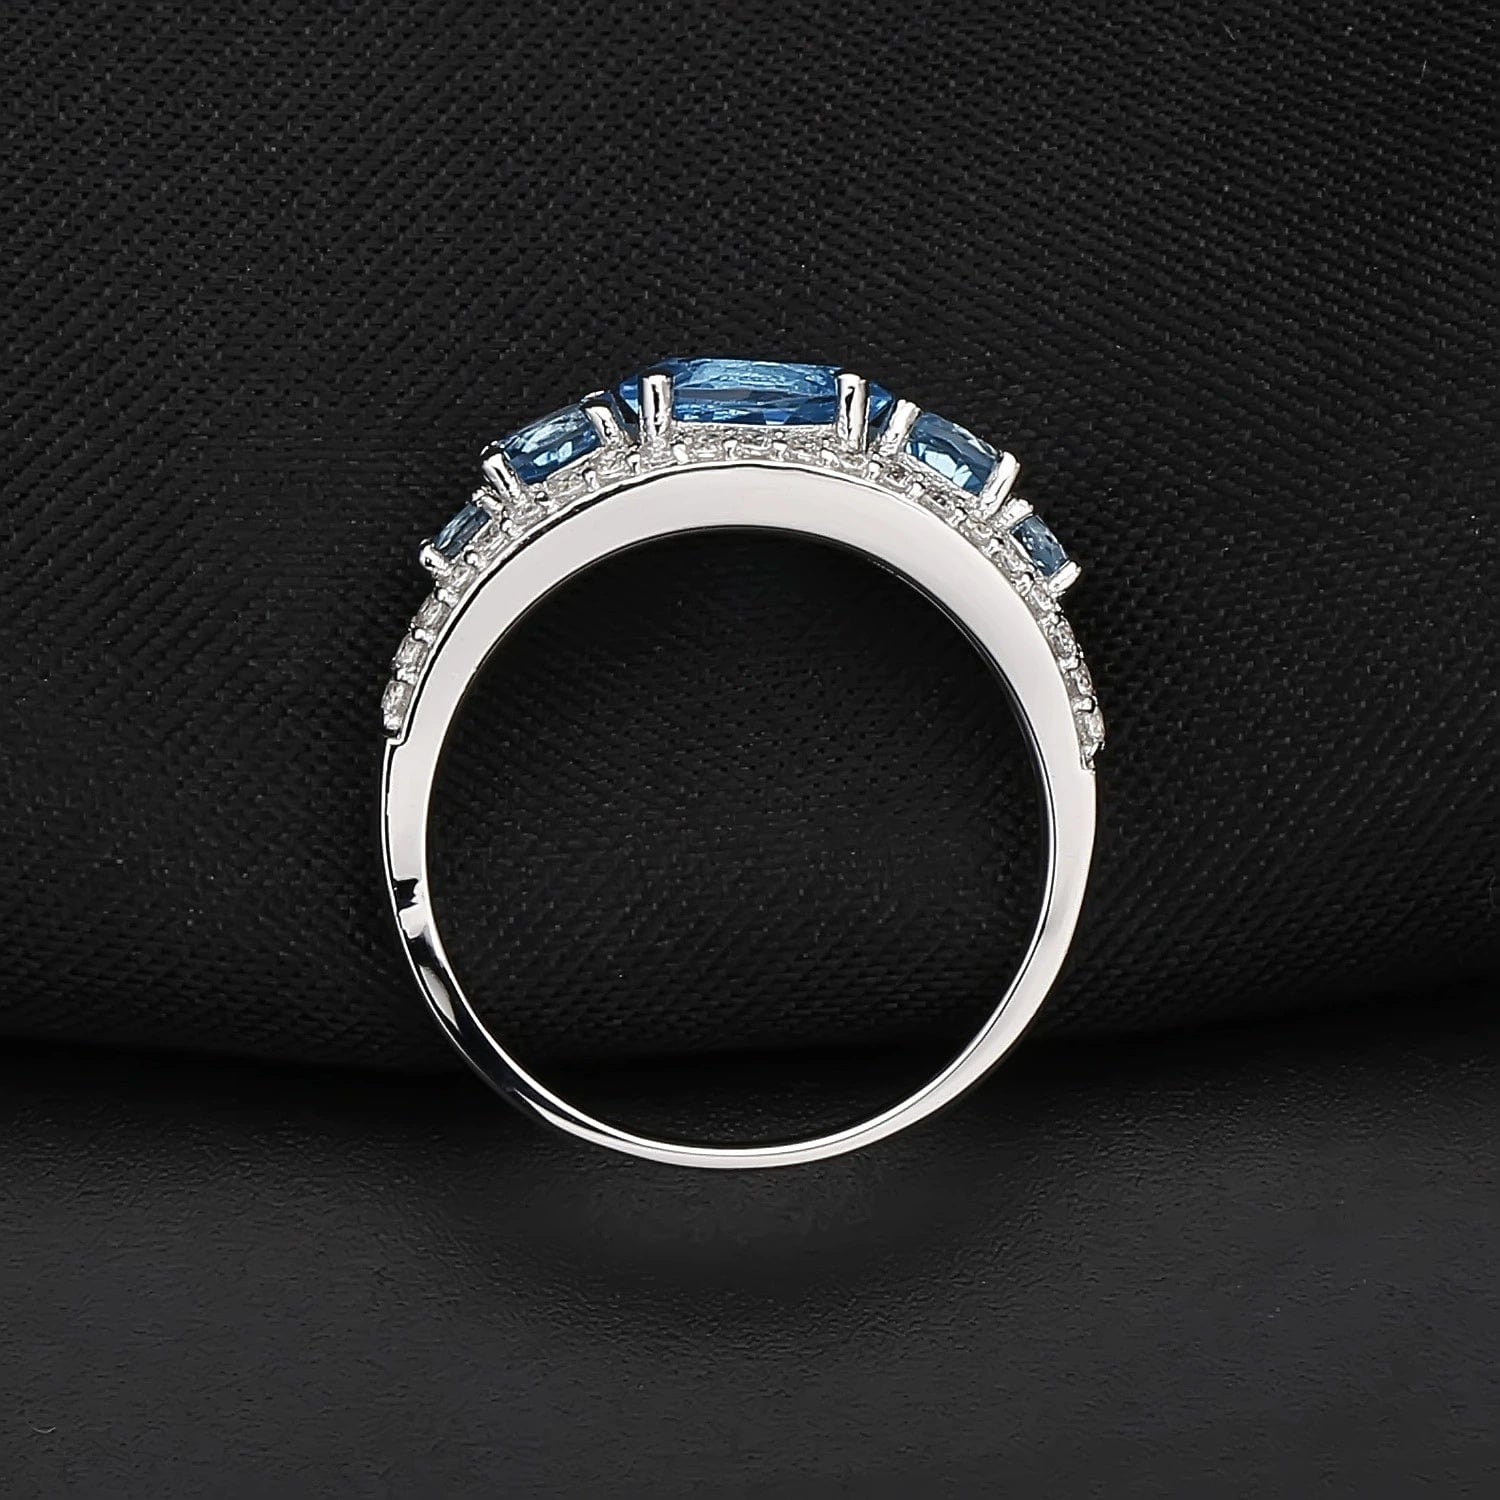 JuJumoose S925 Silver 1.58 Ct Natural Topaz Cluster Ring